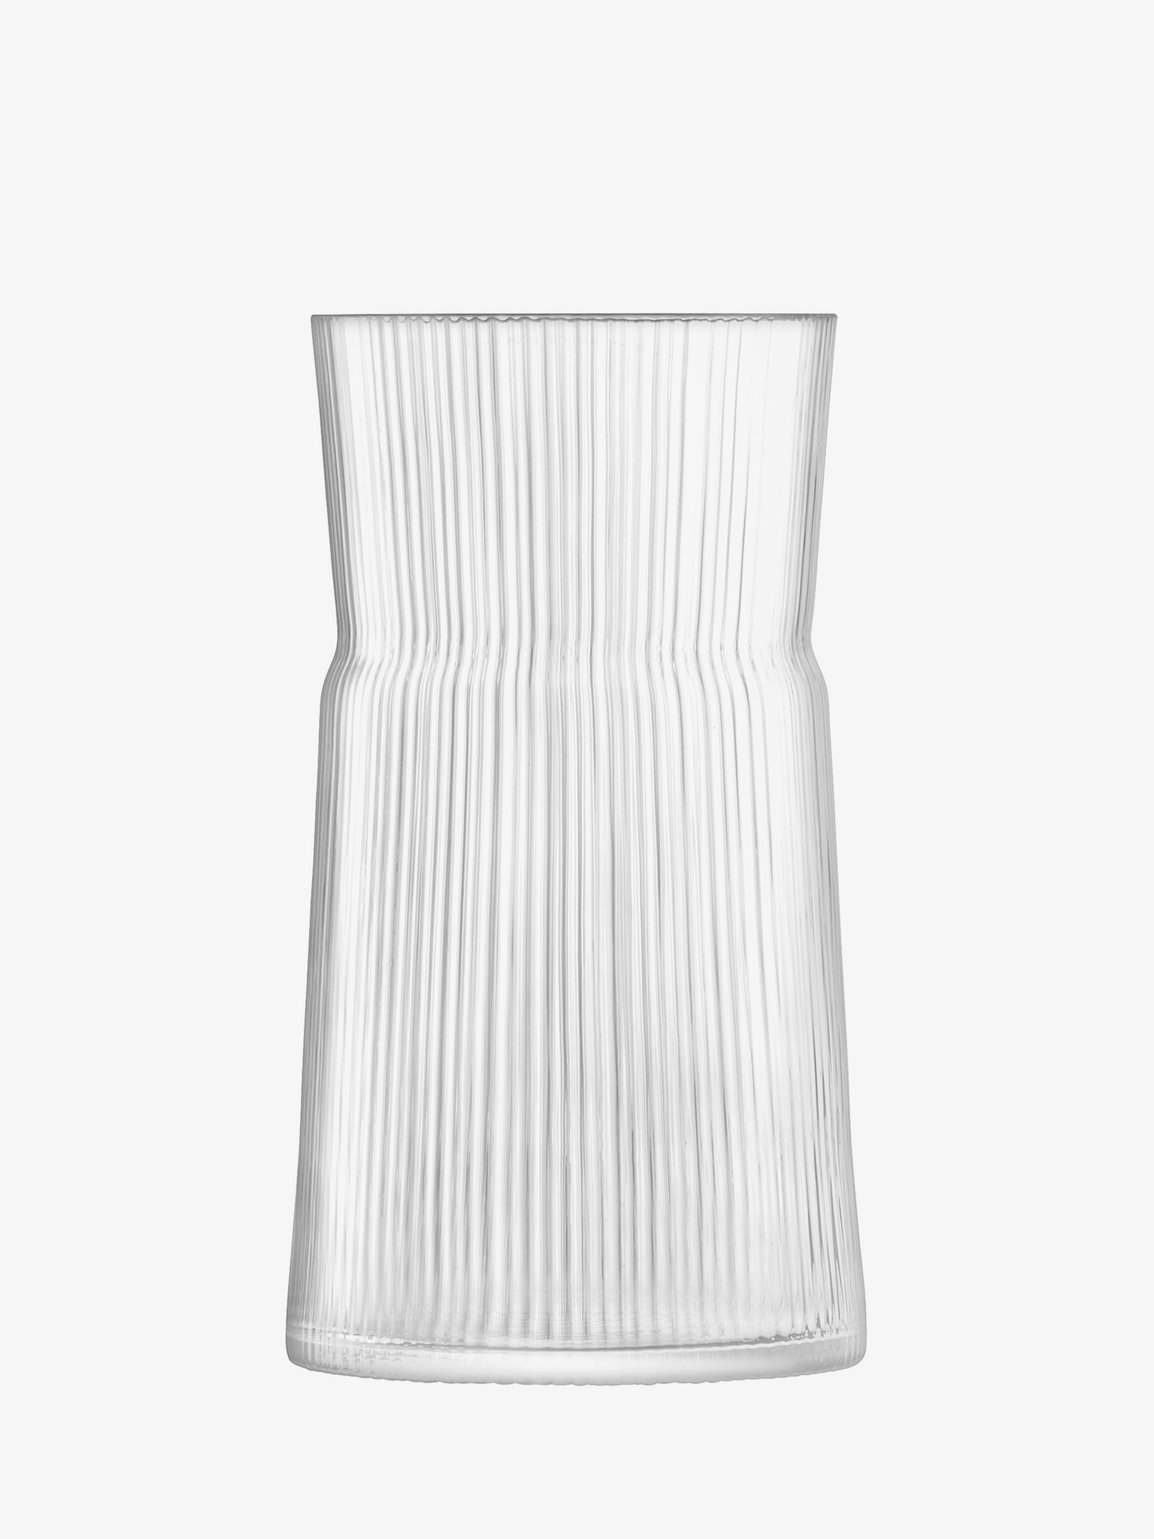 Lantern/Vase H29cm